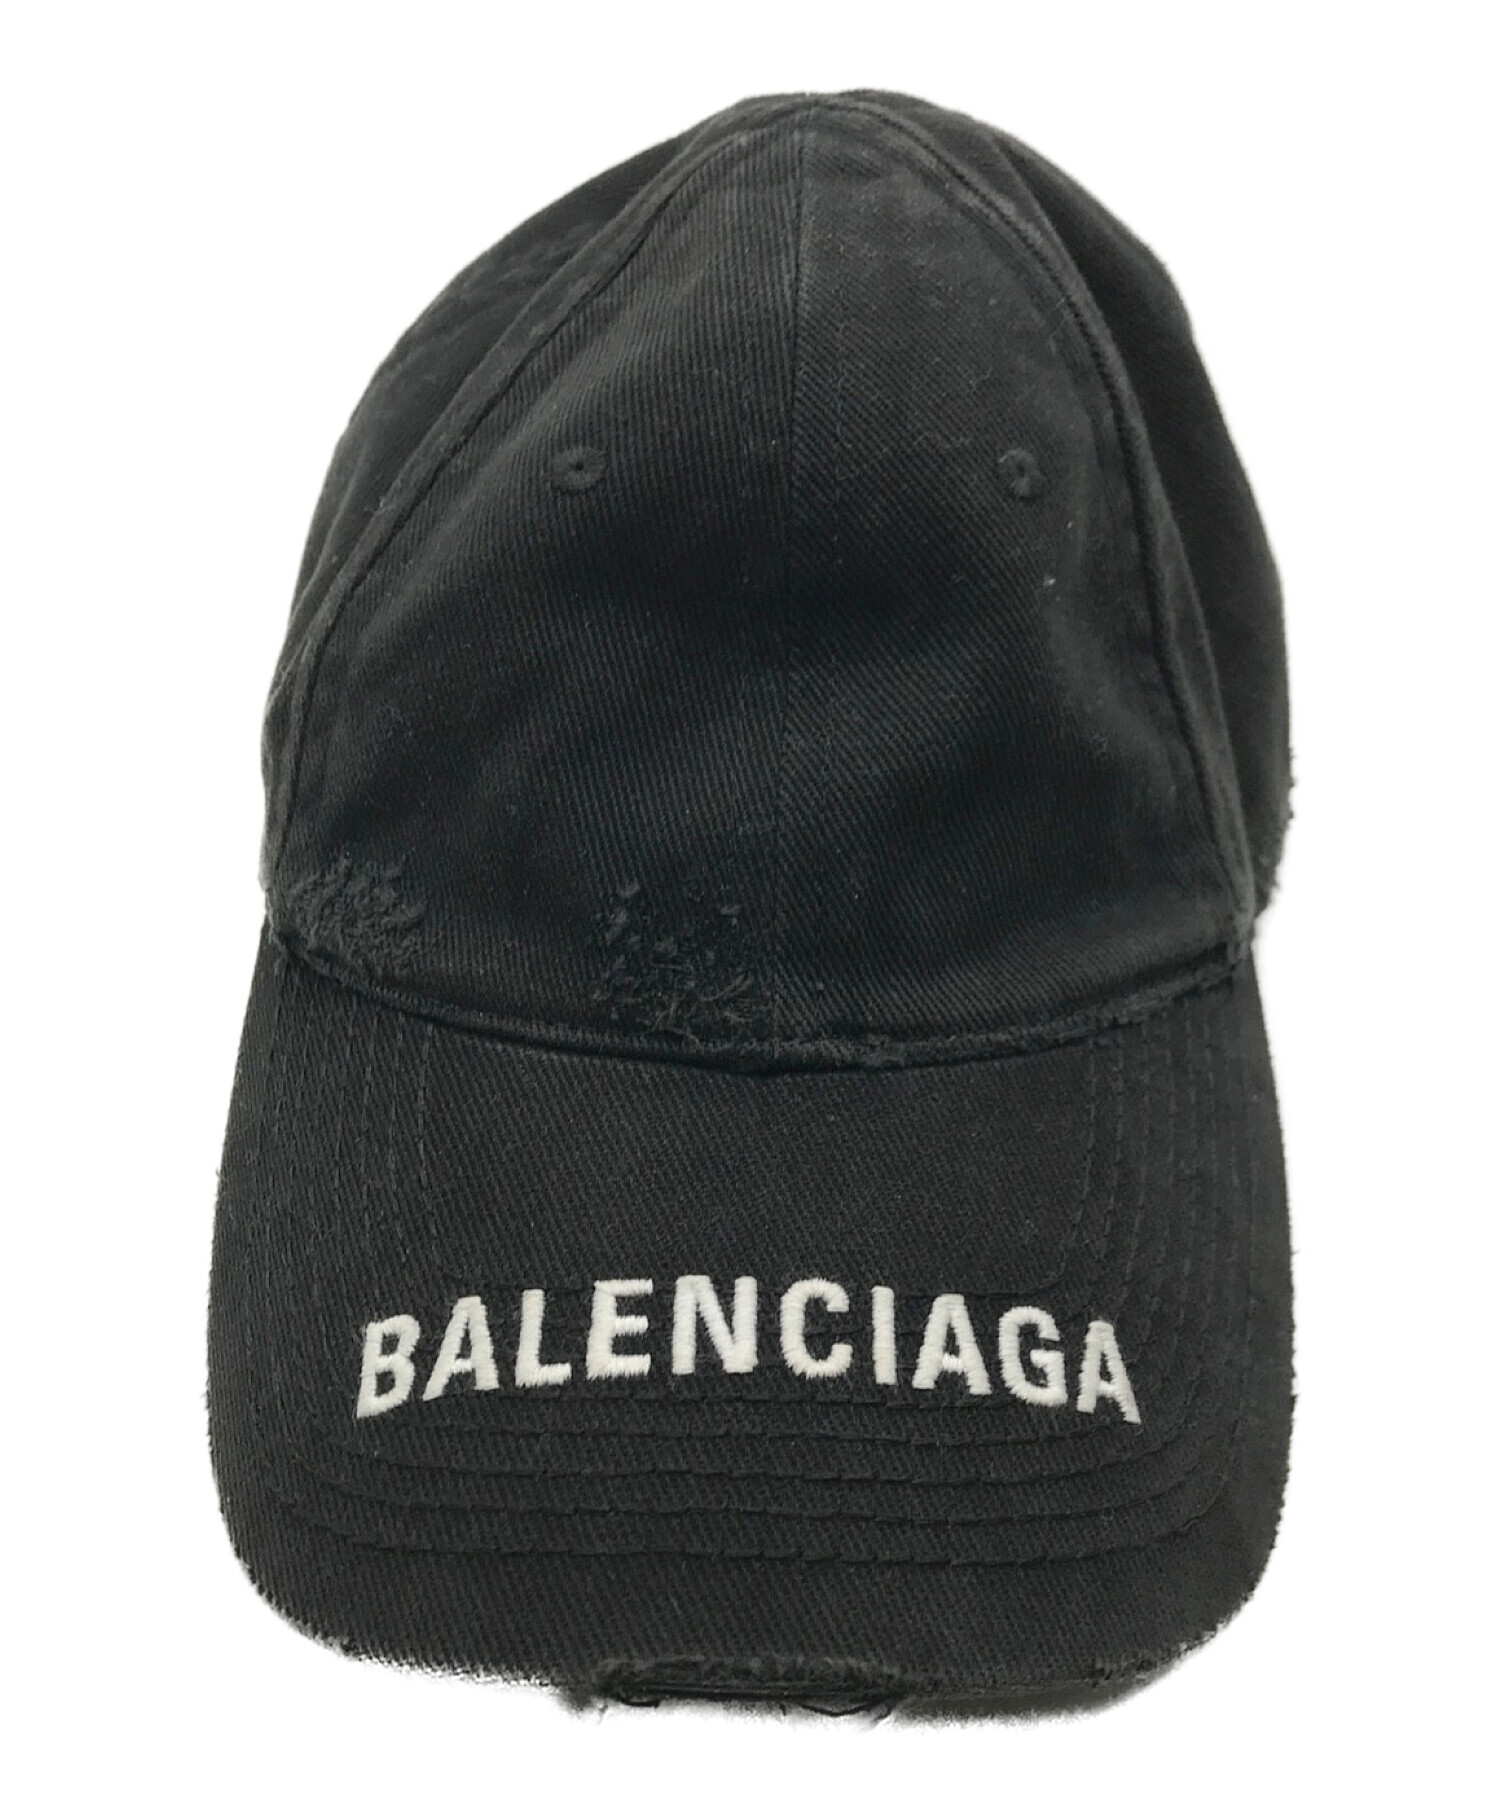 BALENCIAGA (バレンシアガ) ダメージ加工キャップ ブラック サイズ:S(55cm)